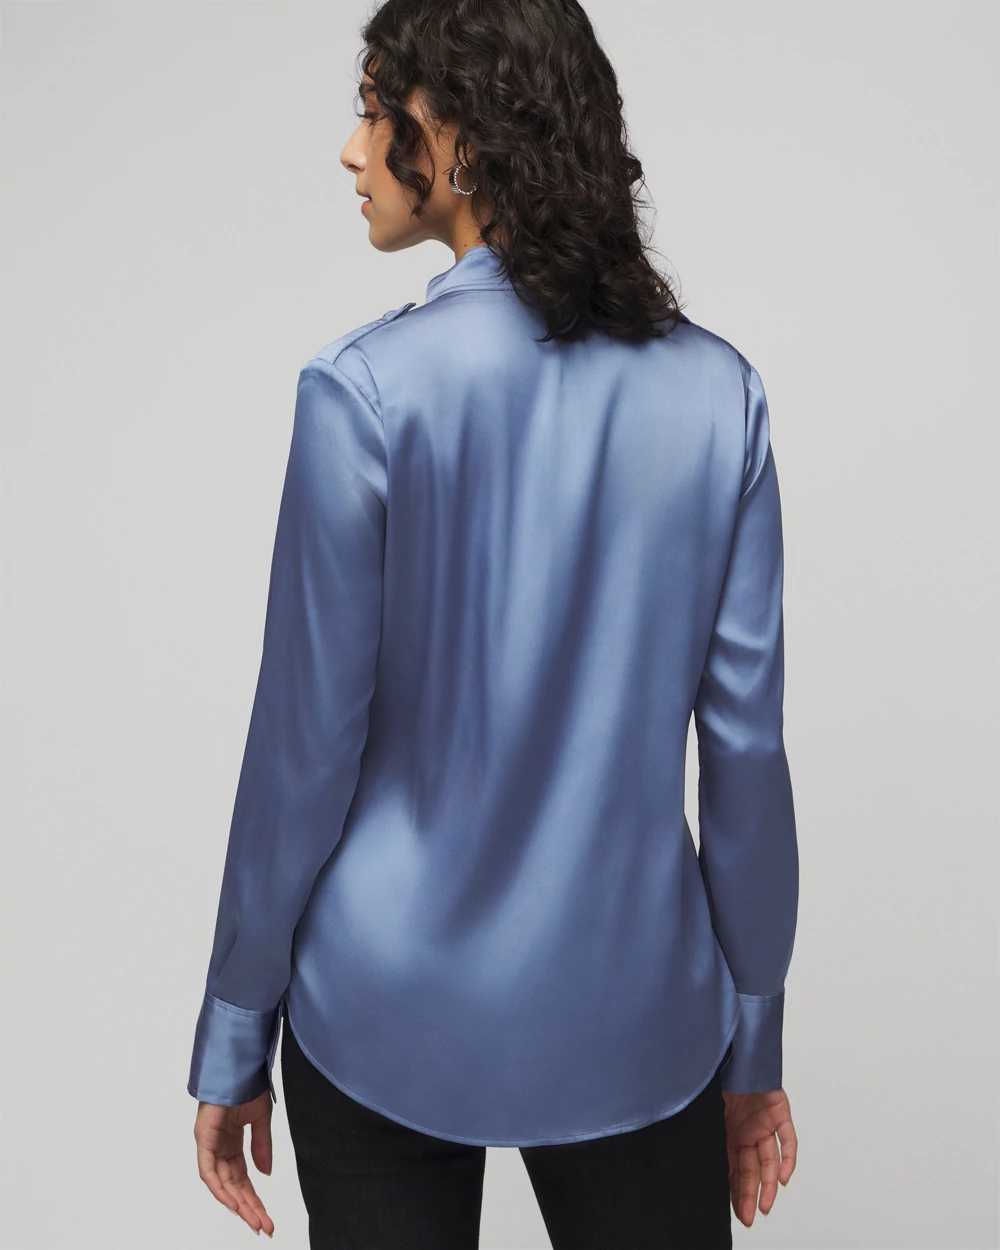 Long Sleeve Collar Pocket Shirt click to view larger image.